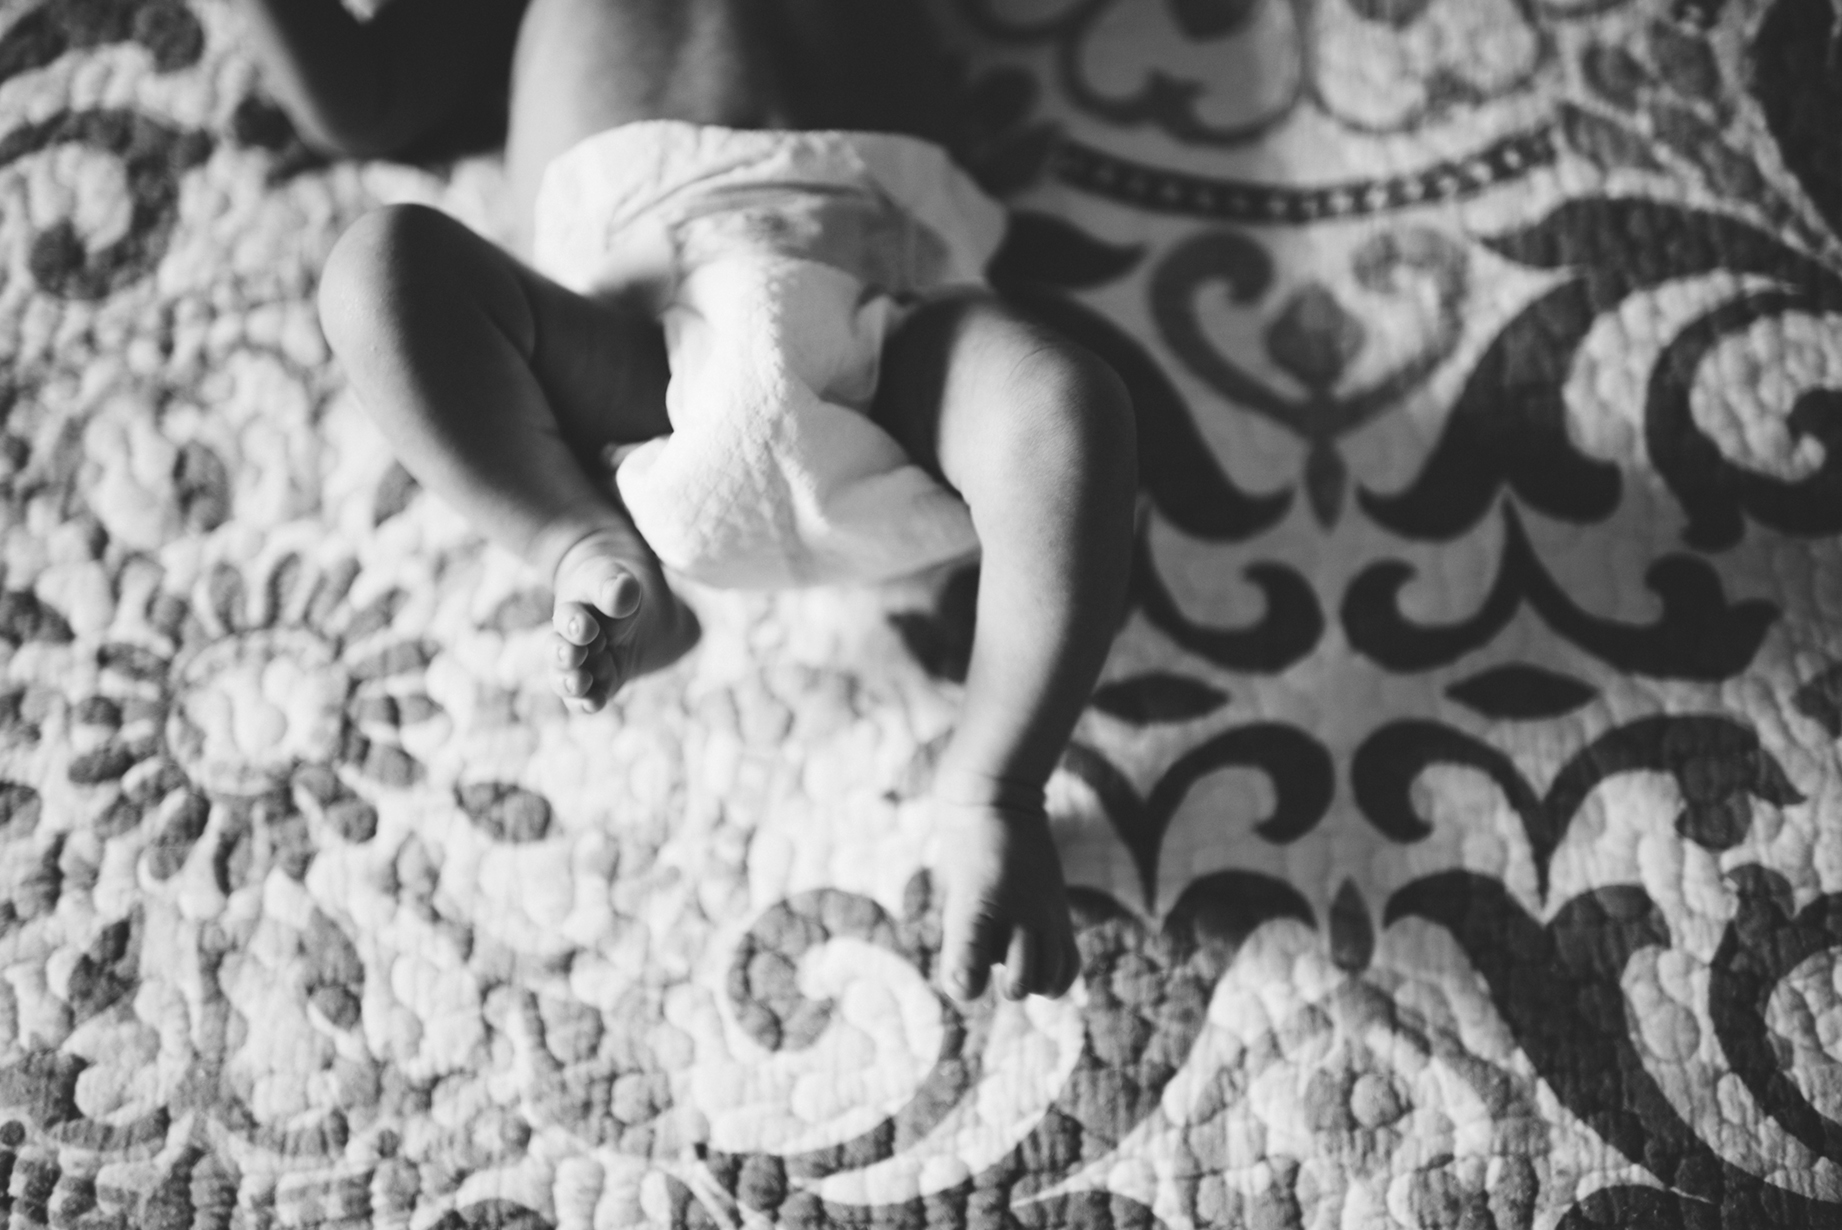 Sweet Baby Boy | Baby Mir | Miami Newborn Photographer 